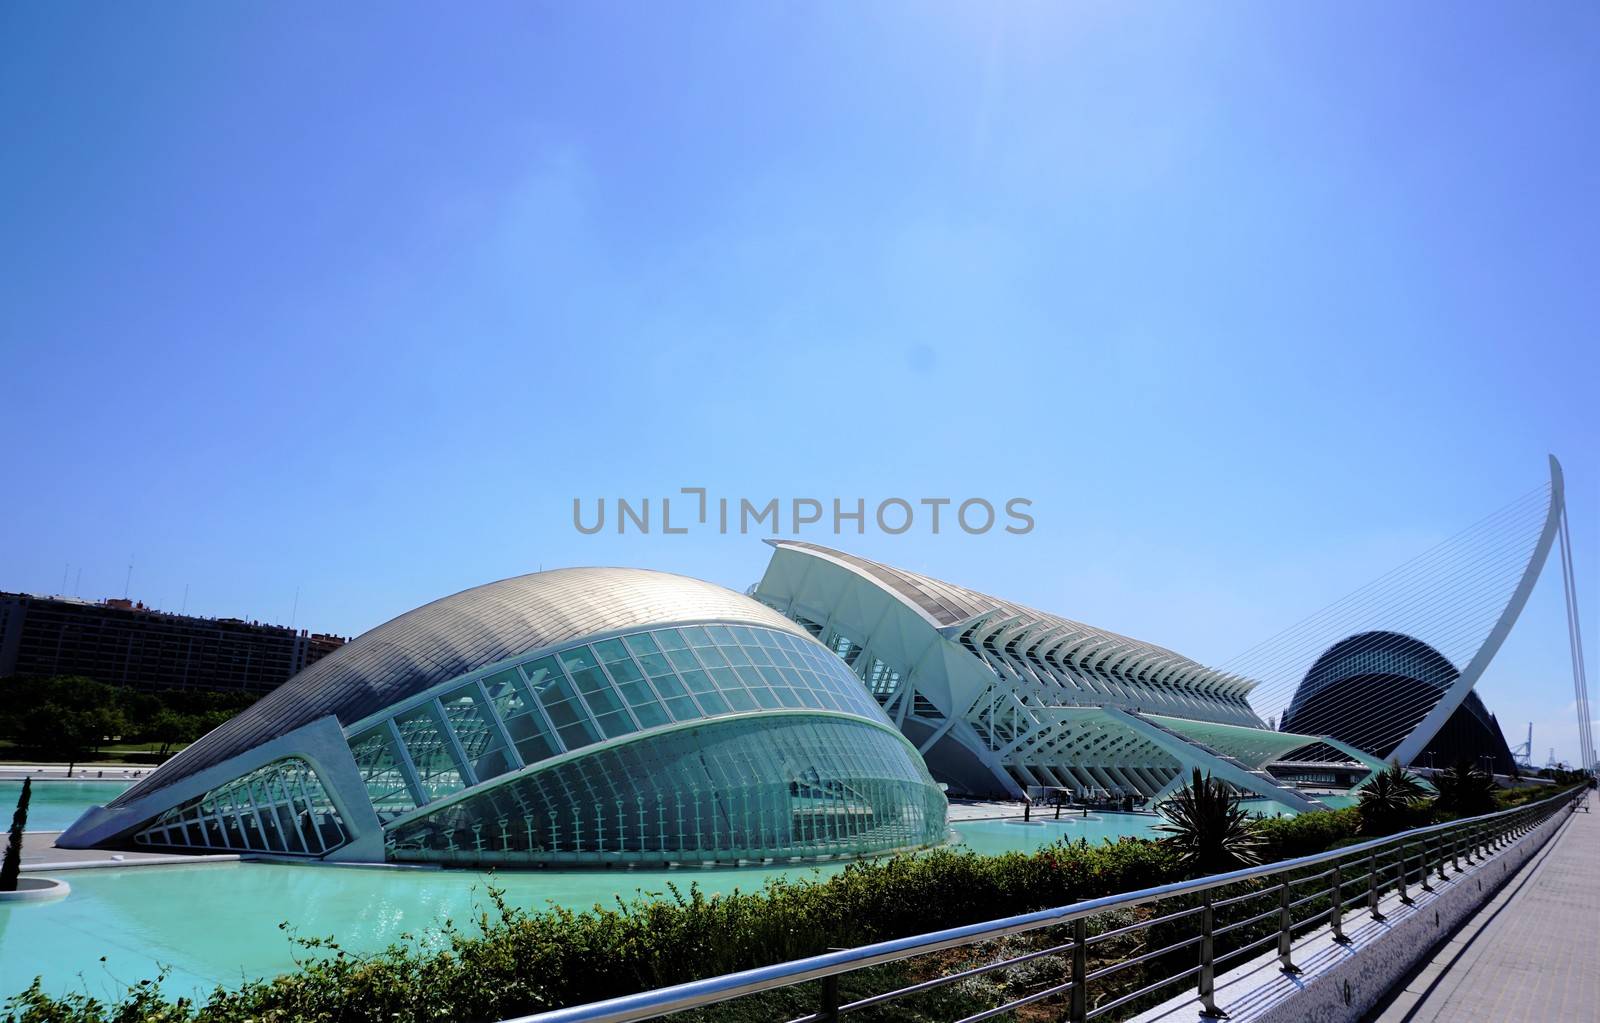 City of Arts and Sciences, Valencia Spain